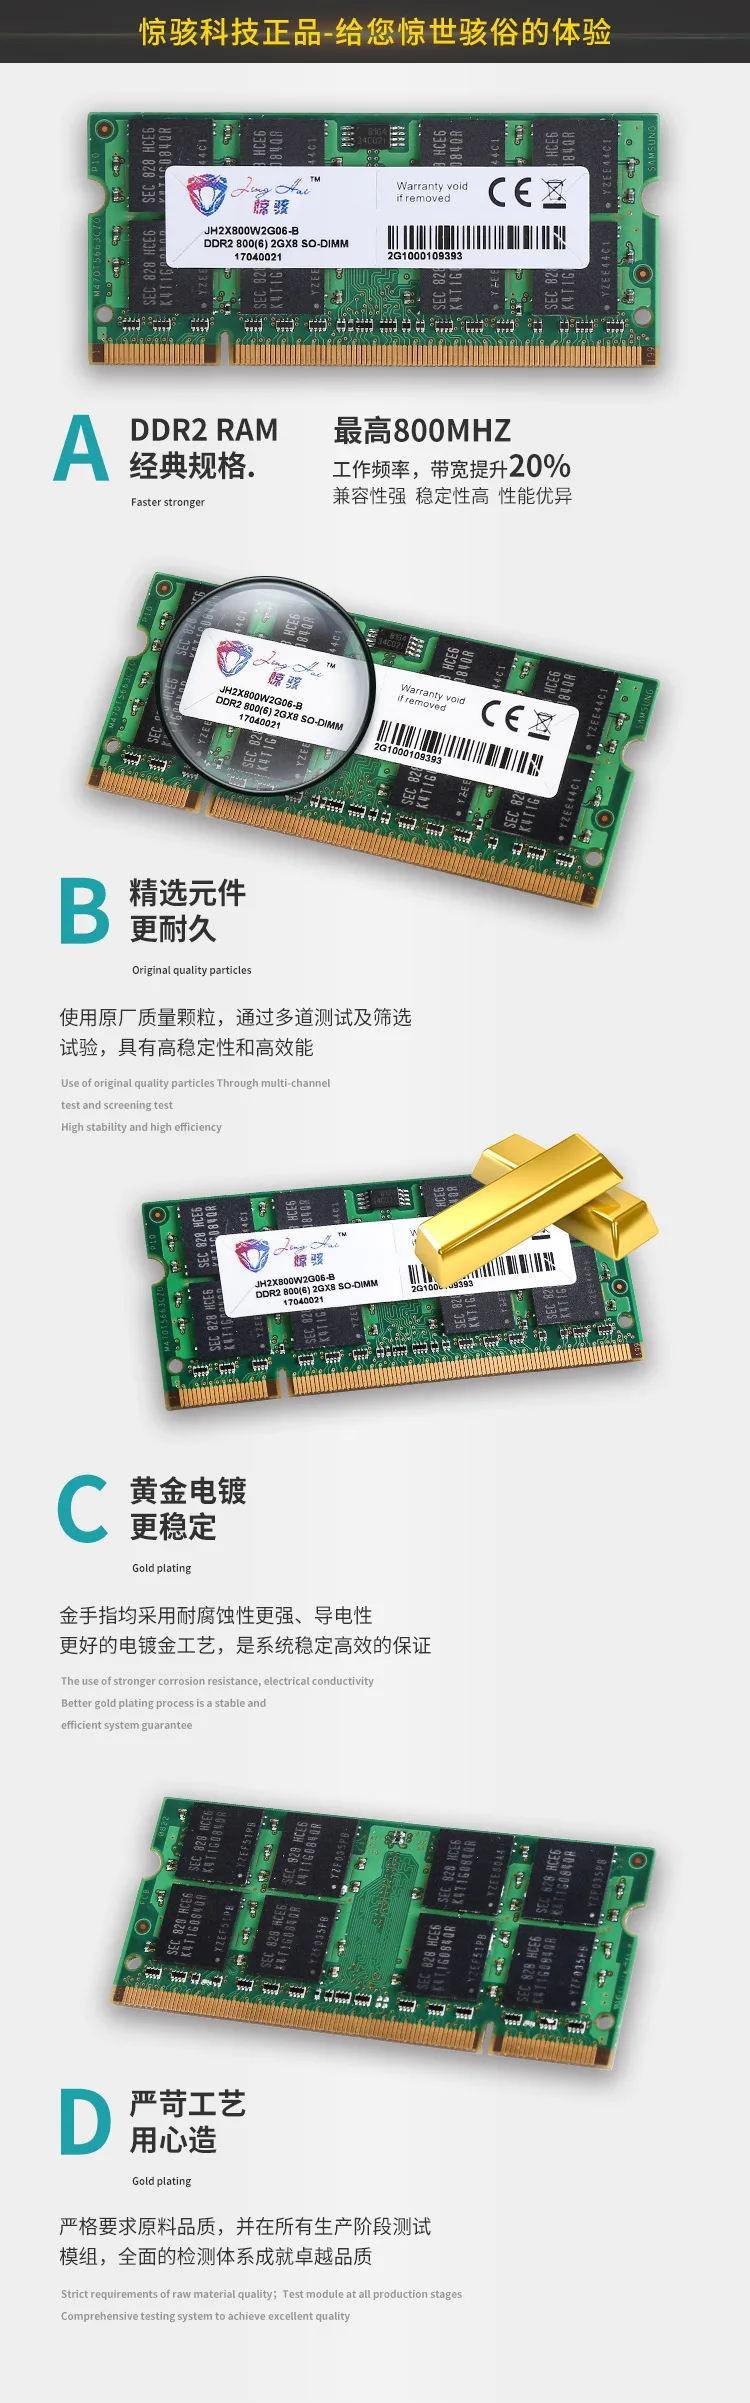 Ударная карта памяти для ноутбука DDR2 800MHz 2GB 1,8 V для ноутбука SODIMM Memoria совместима с DDR 2 2GB PC2-6400S SO-DIMM